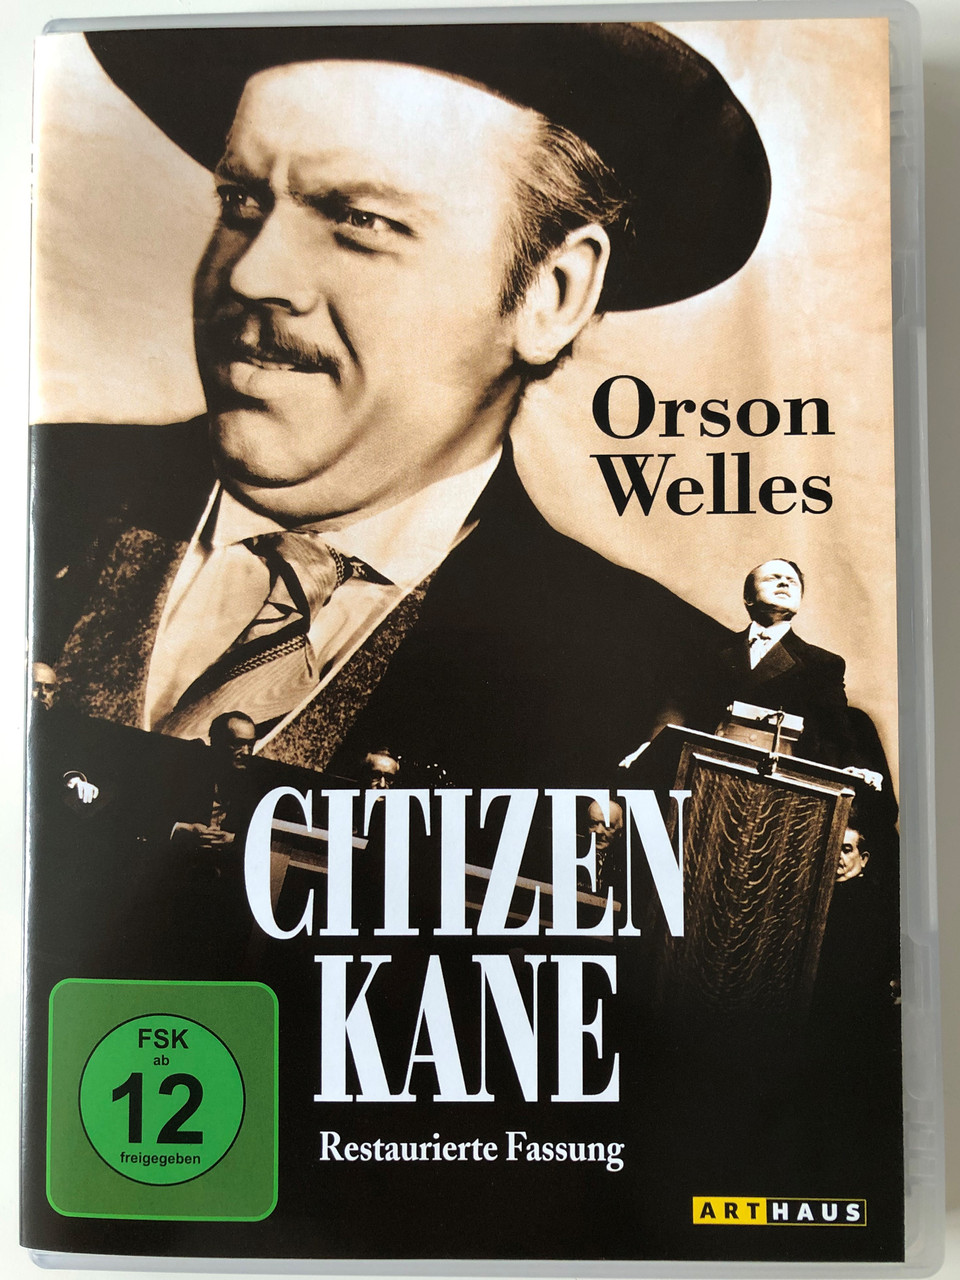 Citizen Kane Dvd 1941 Restaurierte Fassung German Release Restored Version Directed By Orson Welles Starring Orson Welles Joseph Cotten Dorothy Comingore Everett Sloane Ray Collins Bibleinmylanguage